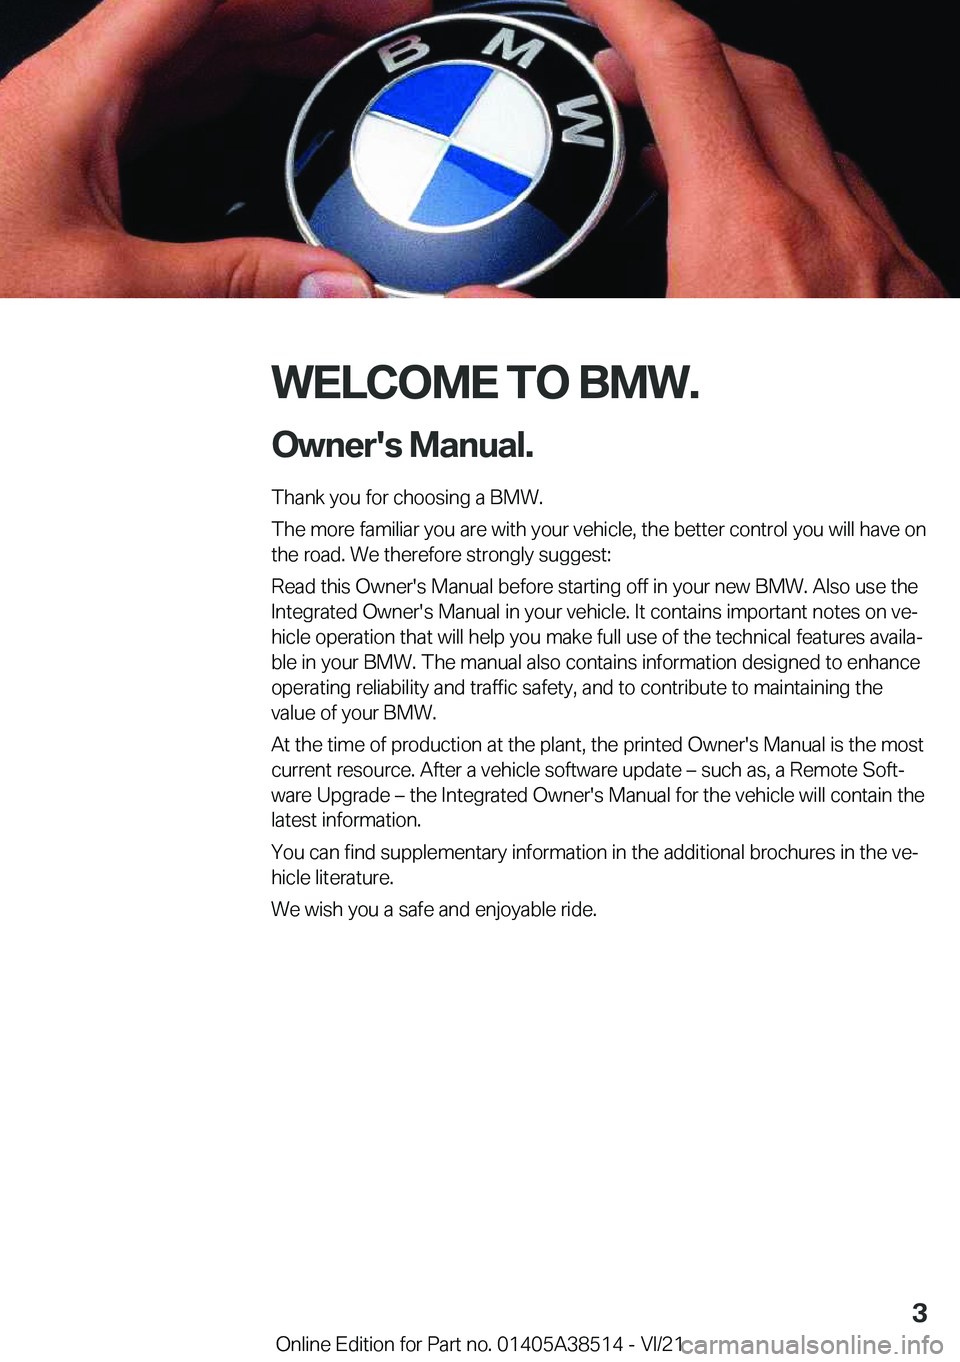 BMW X3 2022  Owners Manual �W�E�L�C�O�M�E��T�O��B�M�W�.�O�w�n�e�r�'�s��M�a�n�u�a�l�.
�T�h�a�n�k��y�o�u��f�o�r��c�h�o�o�s�i�n�g��a��B�M�W�.
�T�h�e��m�o�r�e��f�a�m�i�l�i�a�r��y�o�u��a�r�e��w�i�t�h��y�o�u�r��v�e